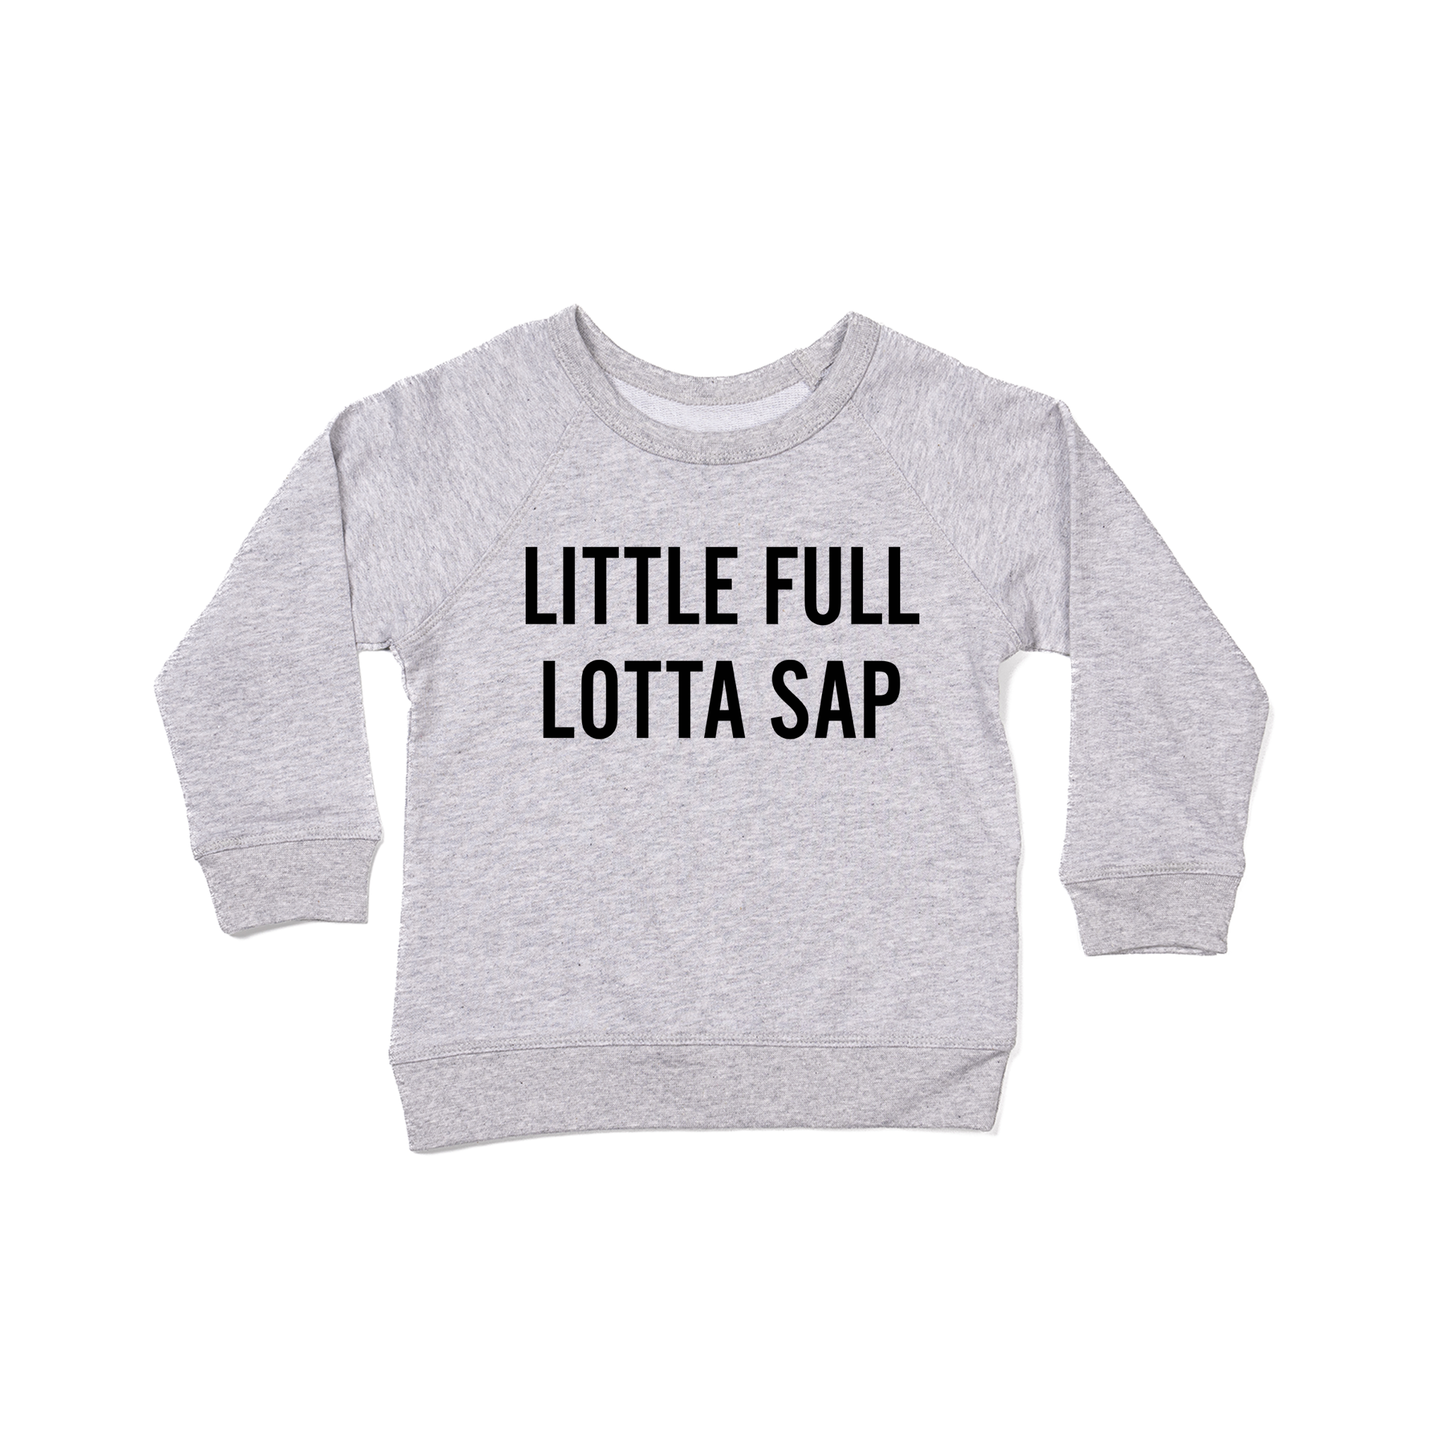 Little Full Lotta Sap (Black) - Kids Sweatshirt (Heather Gray)